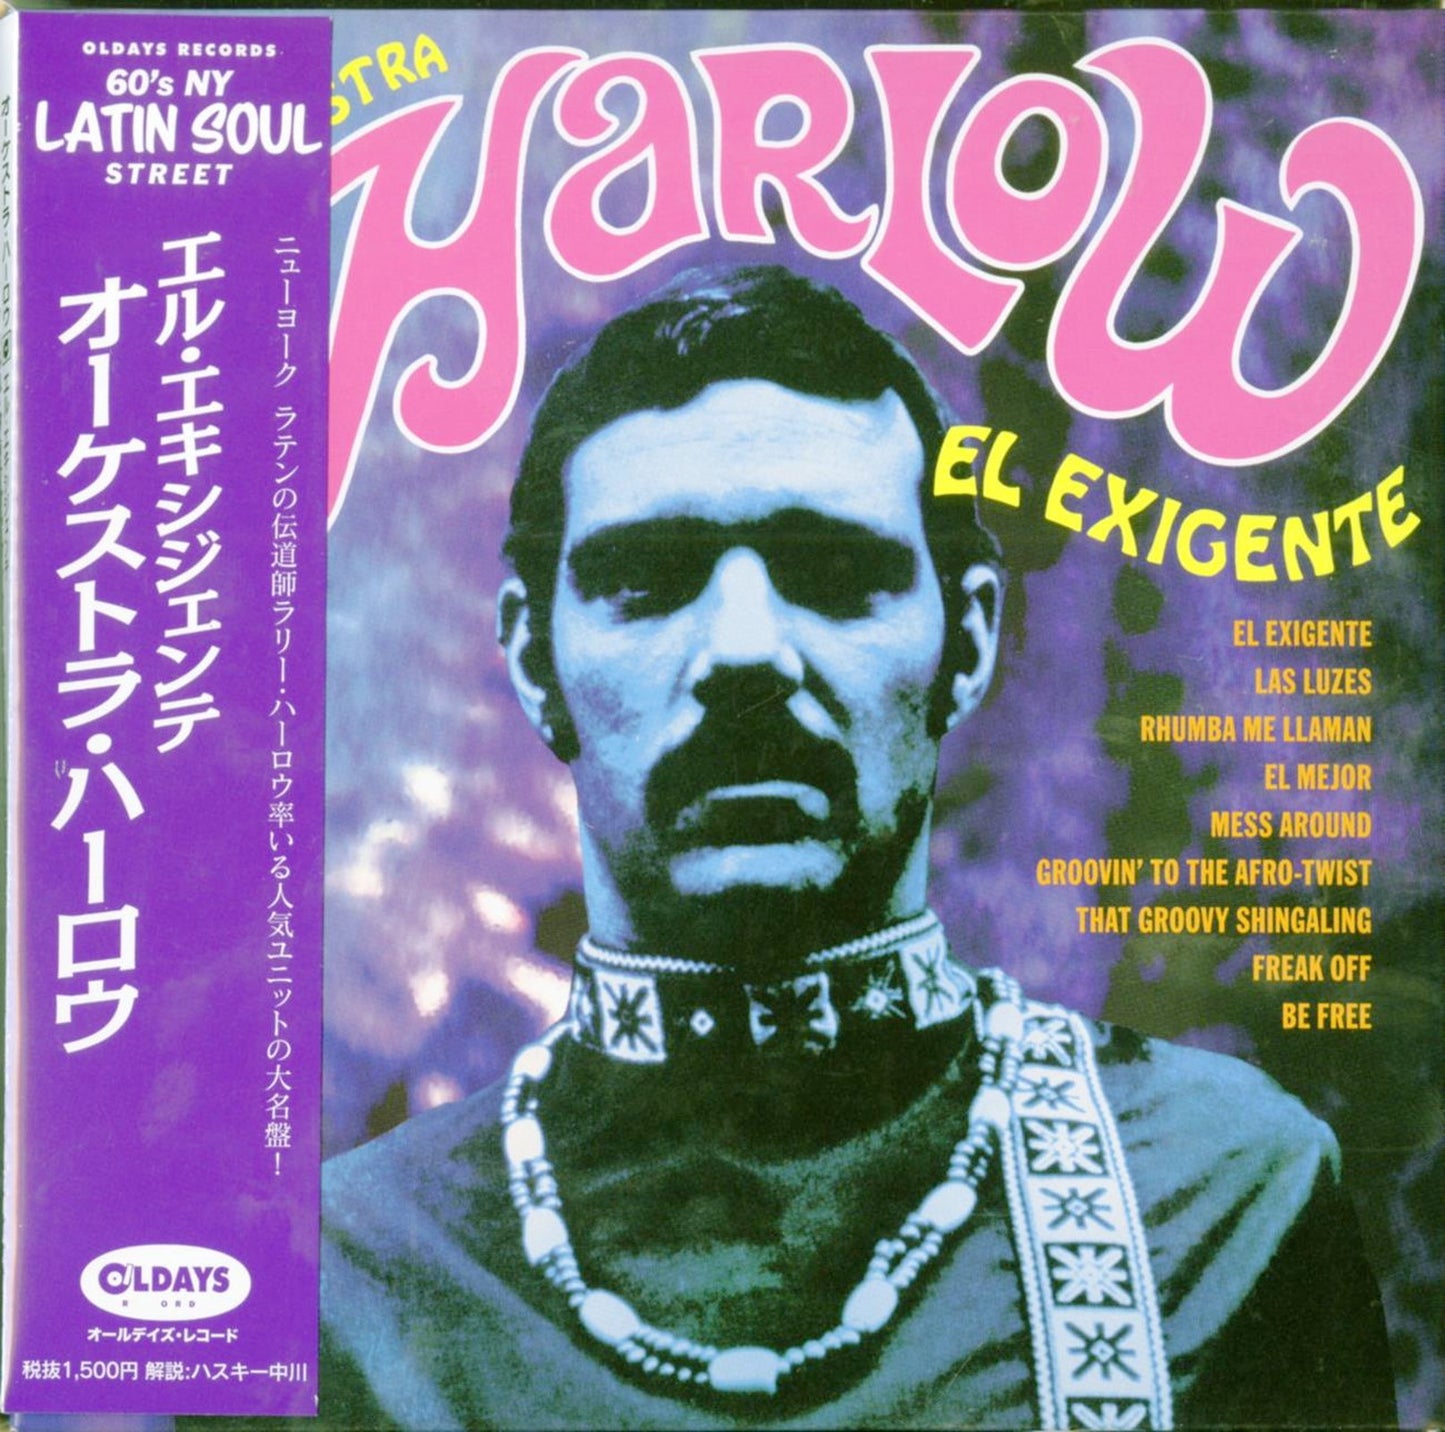 Orchestra Harlow - El Exigente - Japan  Mini LP CD